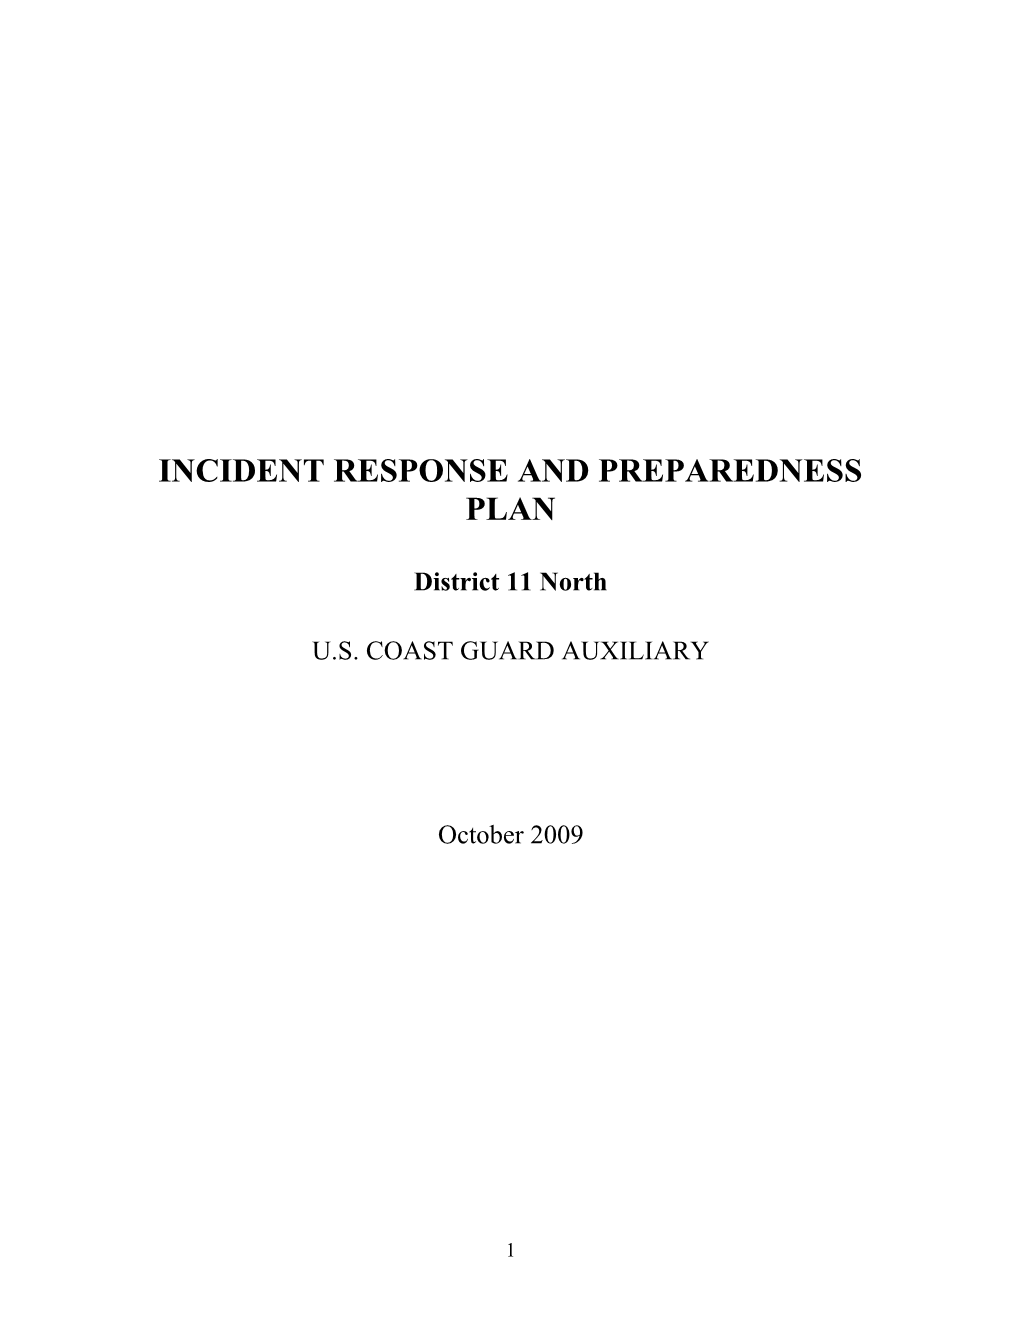 Incident Response and Preparedness Plan